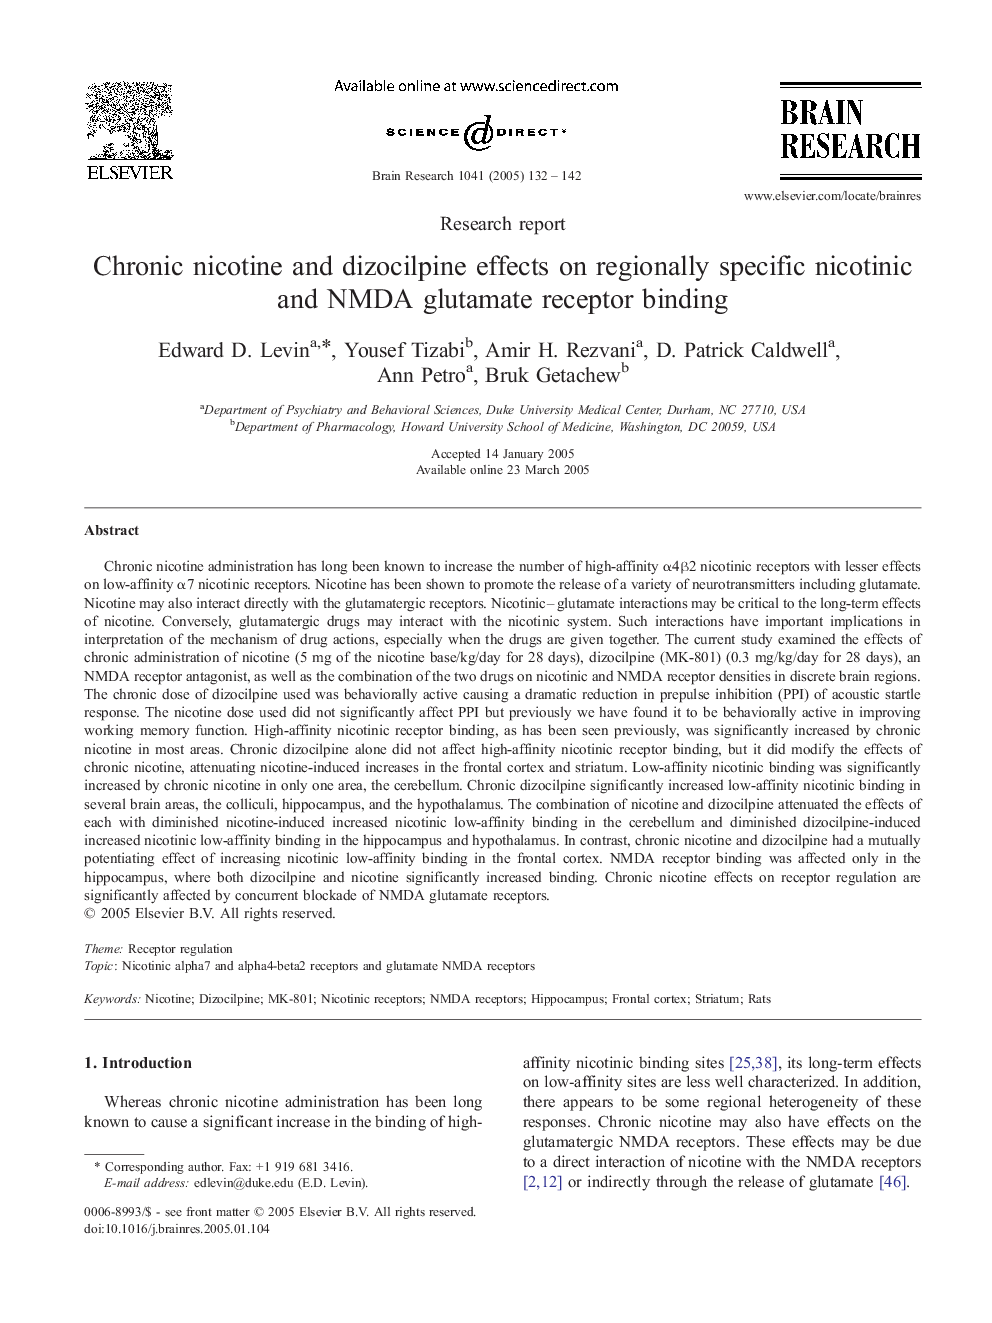 Chronic nicotine and dizocilpine effects on regionally specific nicotinic and NMDA glutamate receptor binding